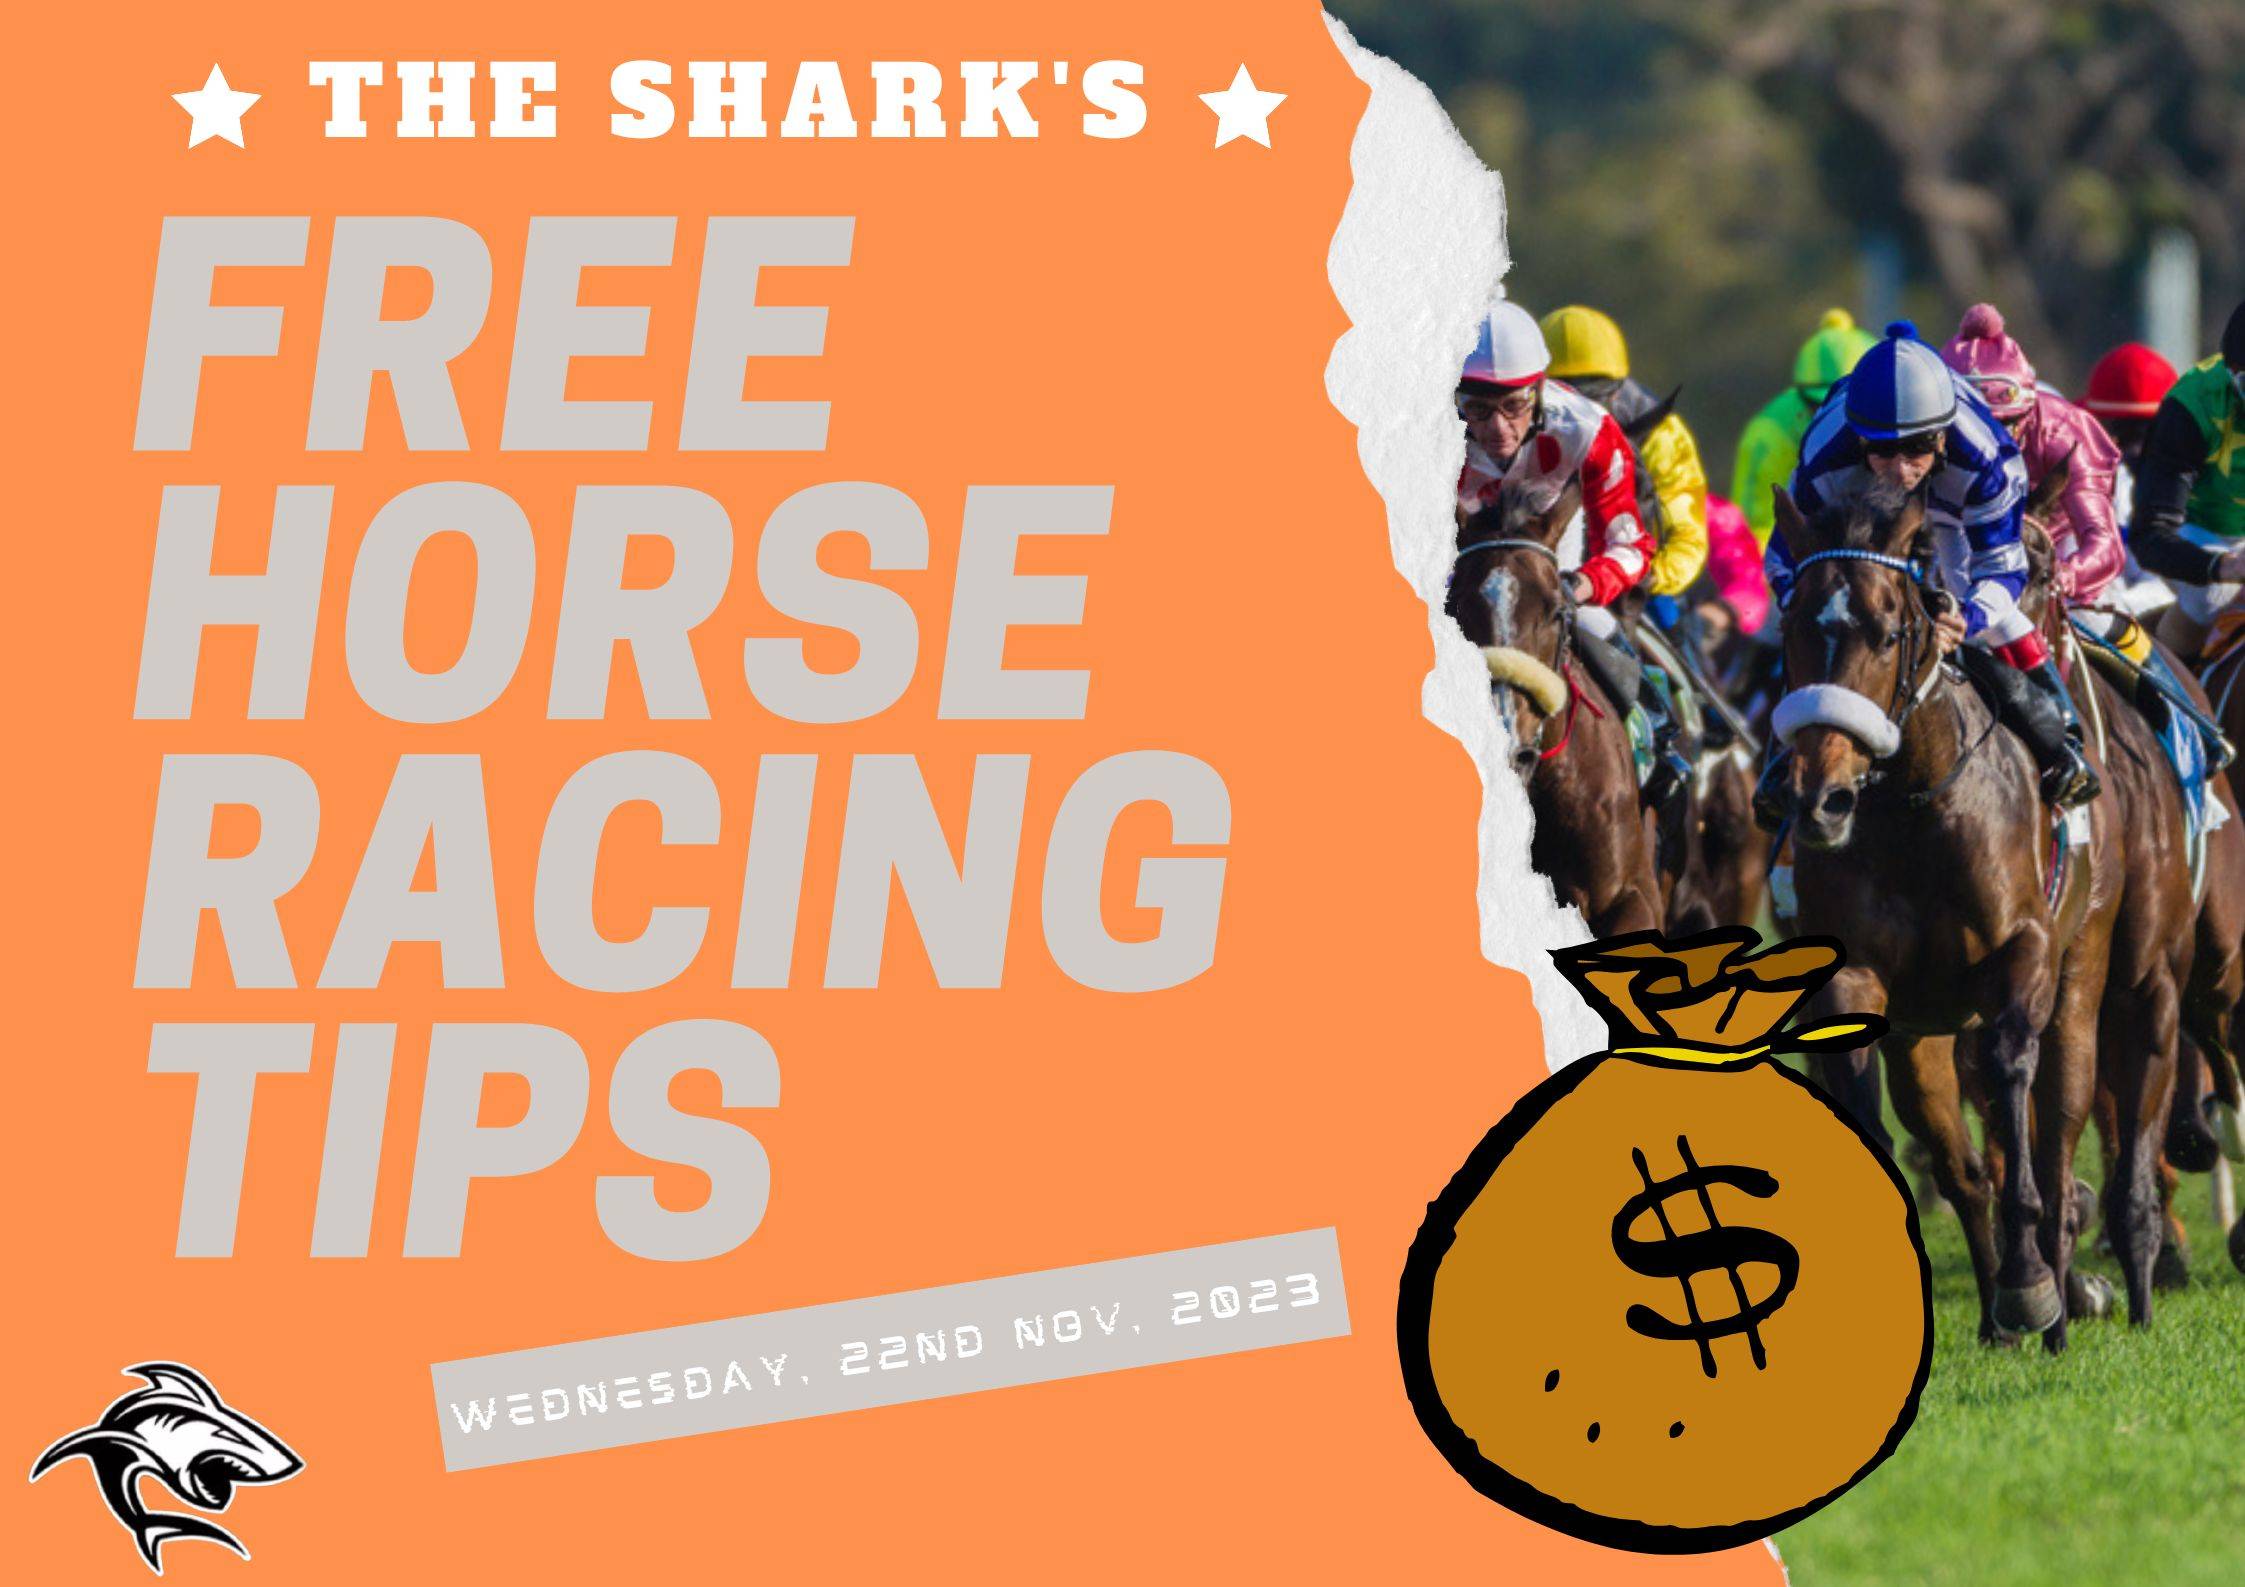 Free Horse Racing Tips - 22nd Nov